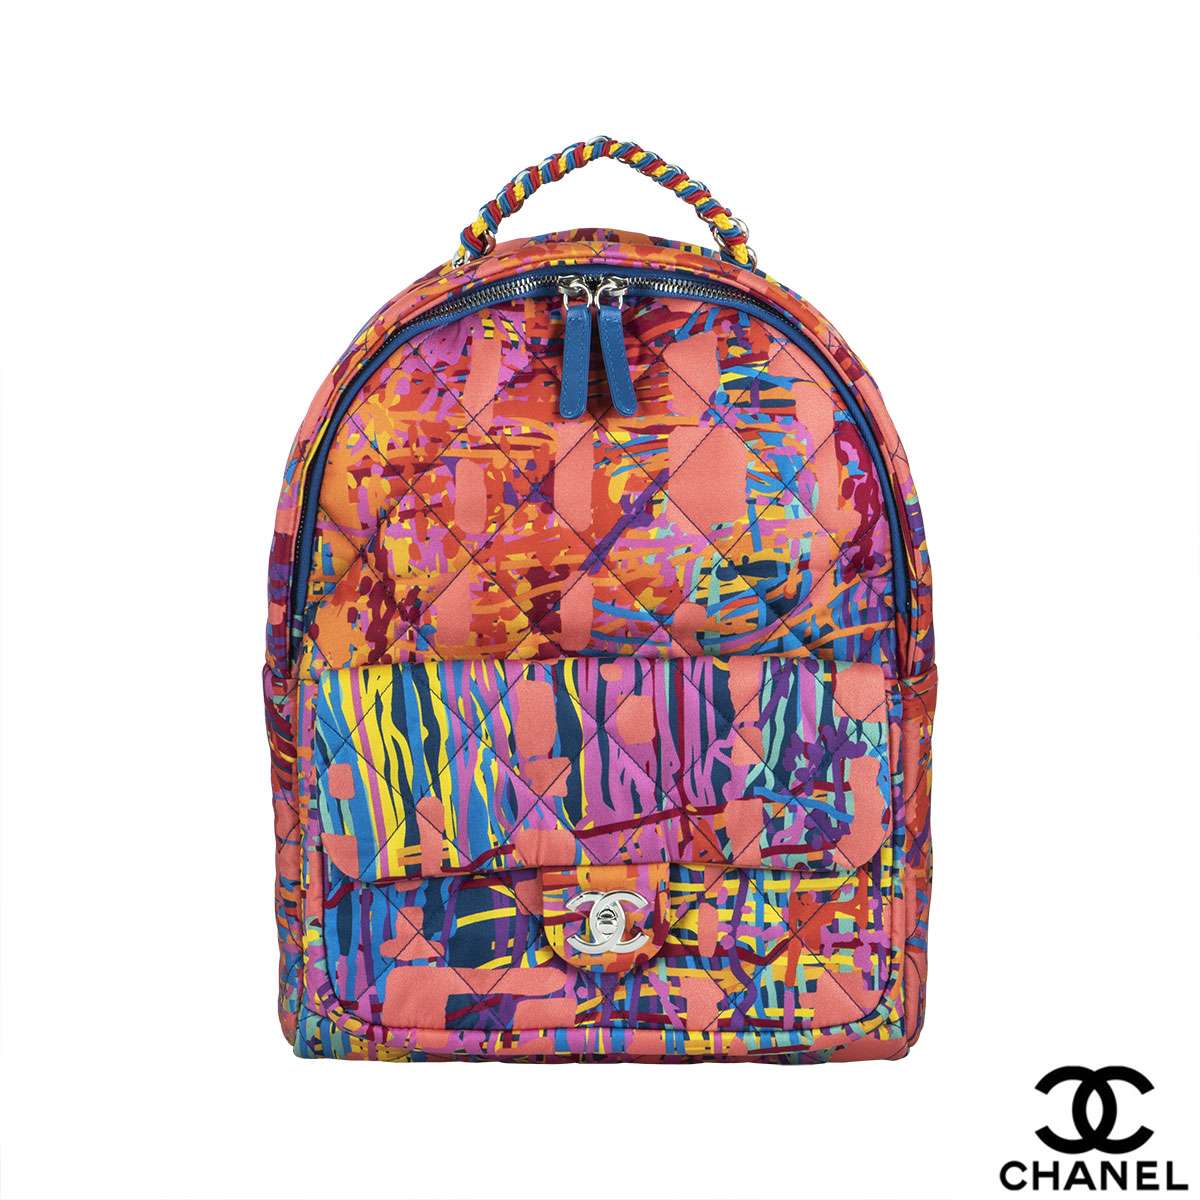 Chanel Graffiti Multicolored Summer 2018 Backpack